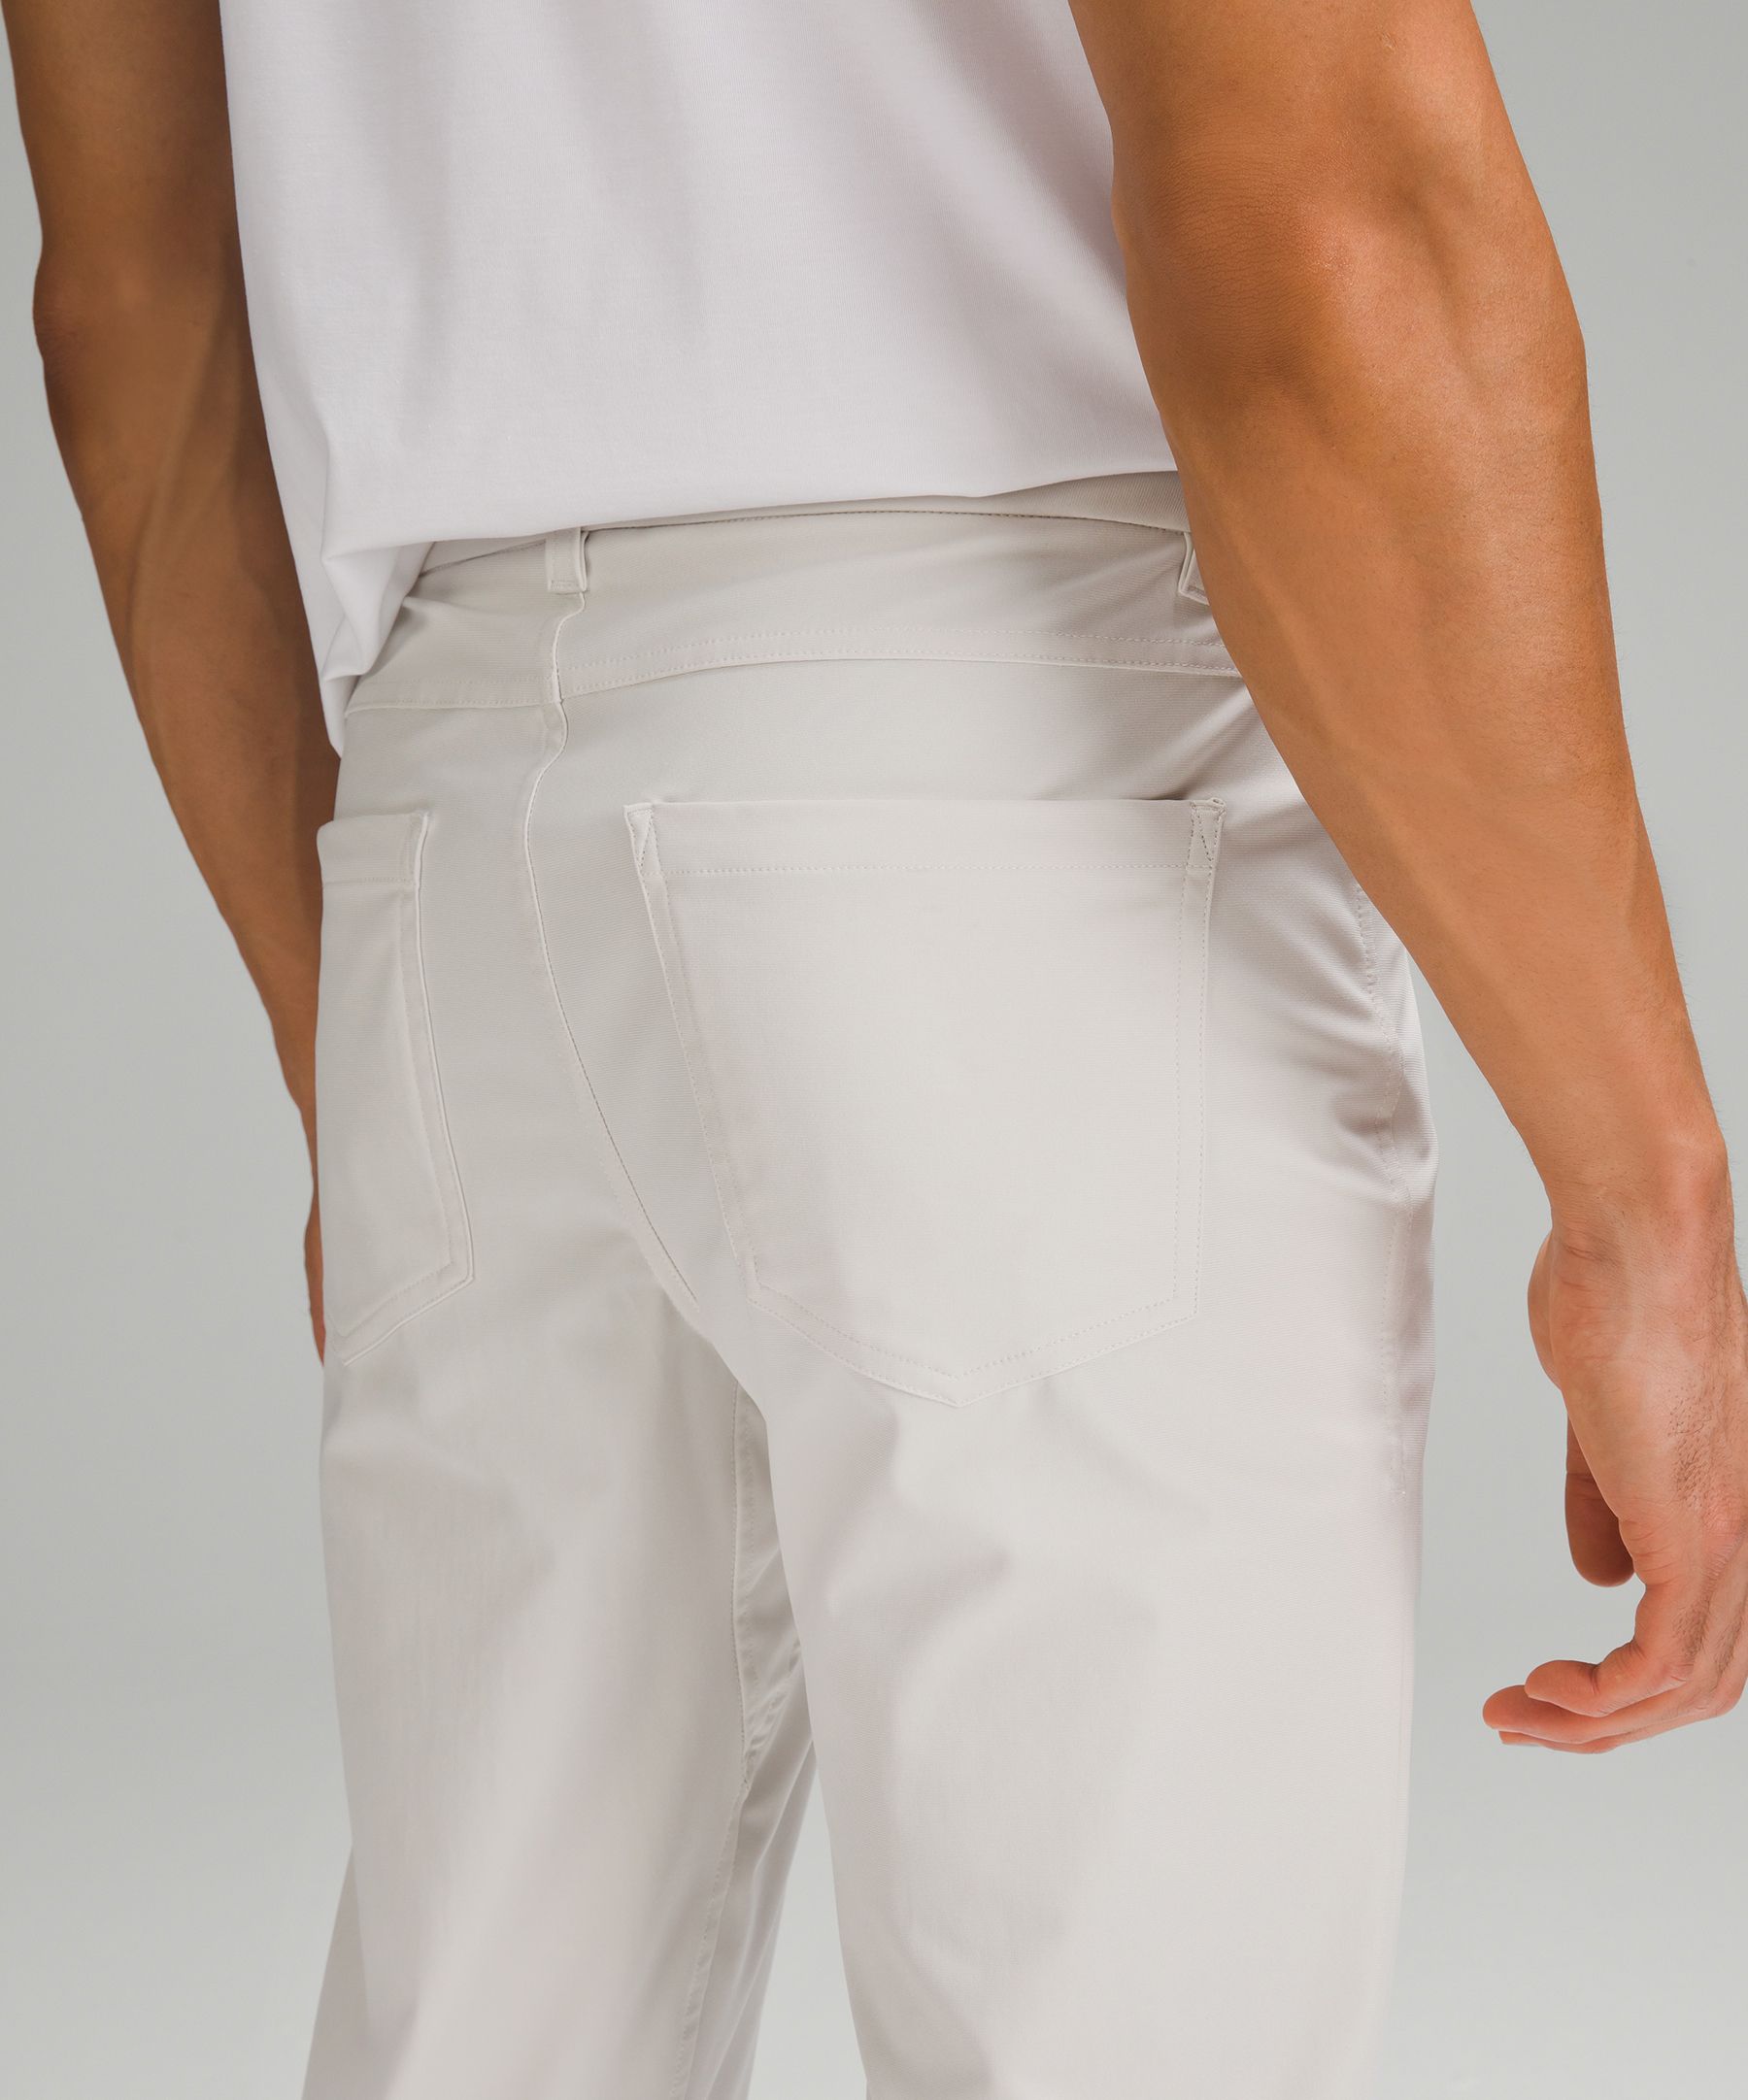 Abc Slim-fit 5 Pocket Pants 34l Warpstreme